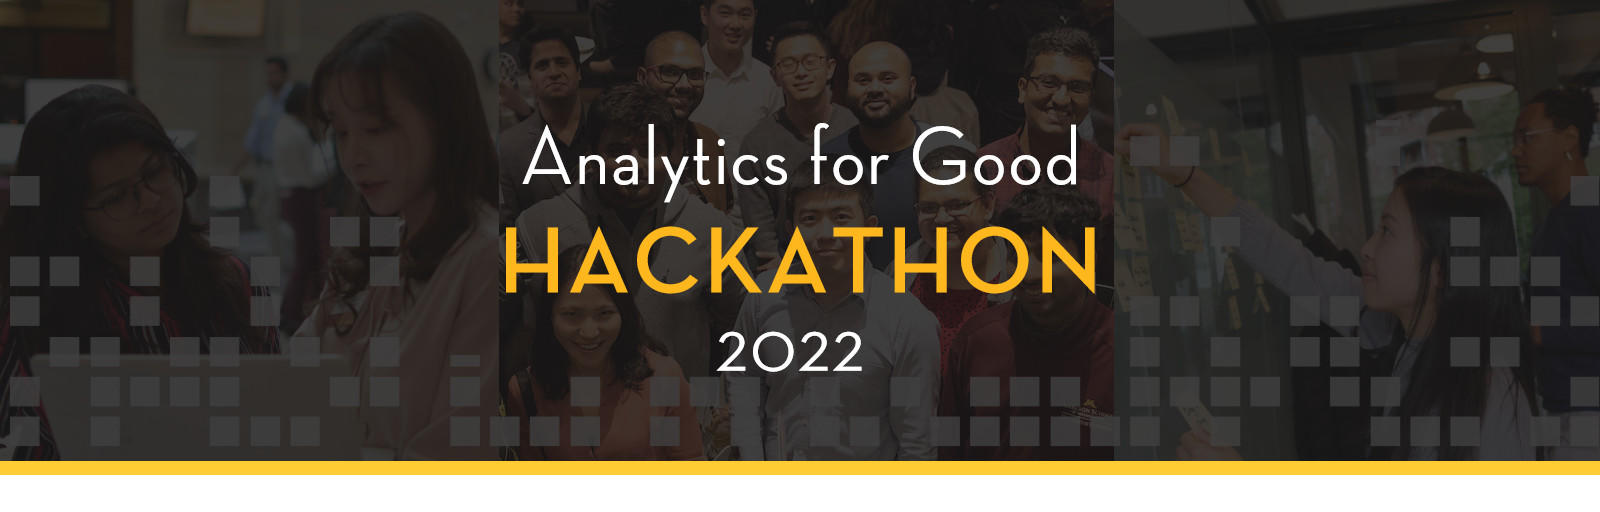 Analytics for Good Hackathon